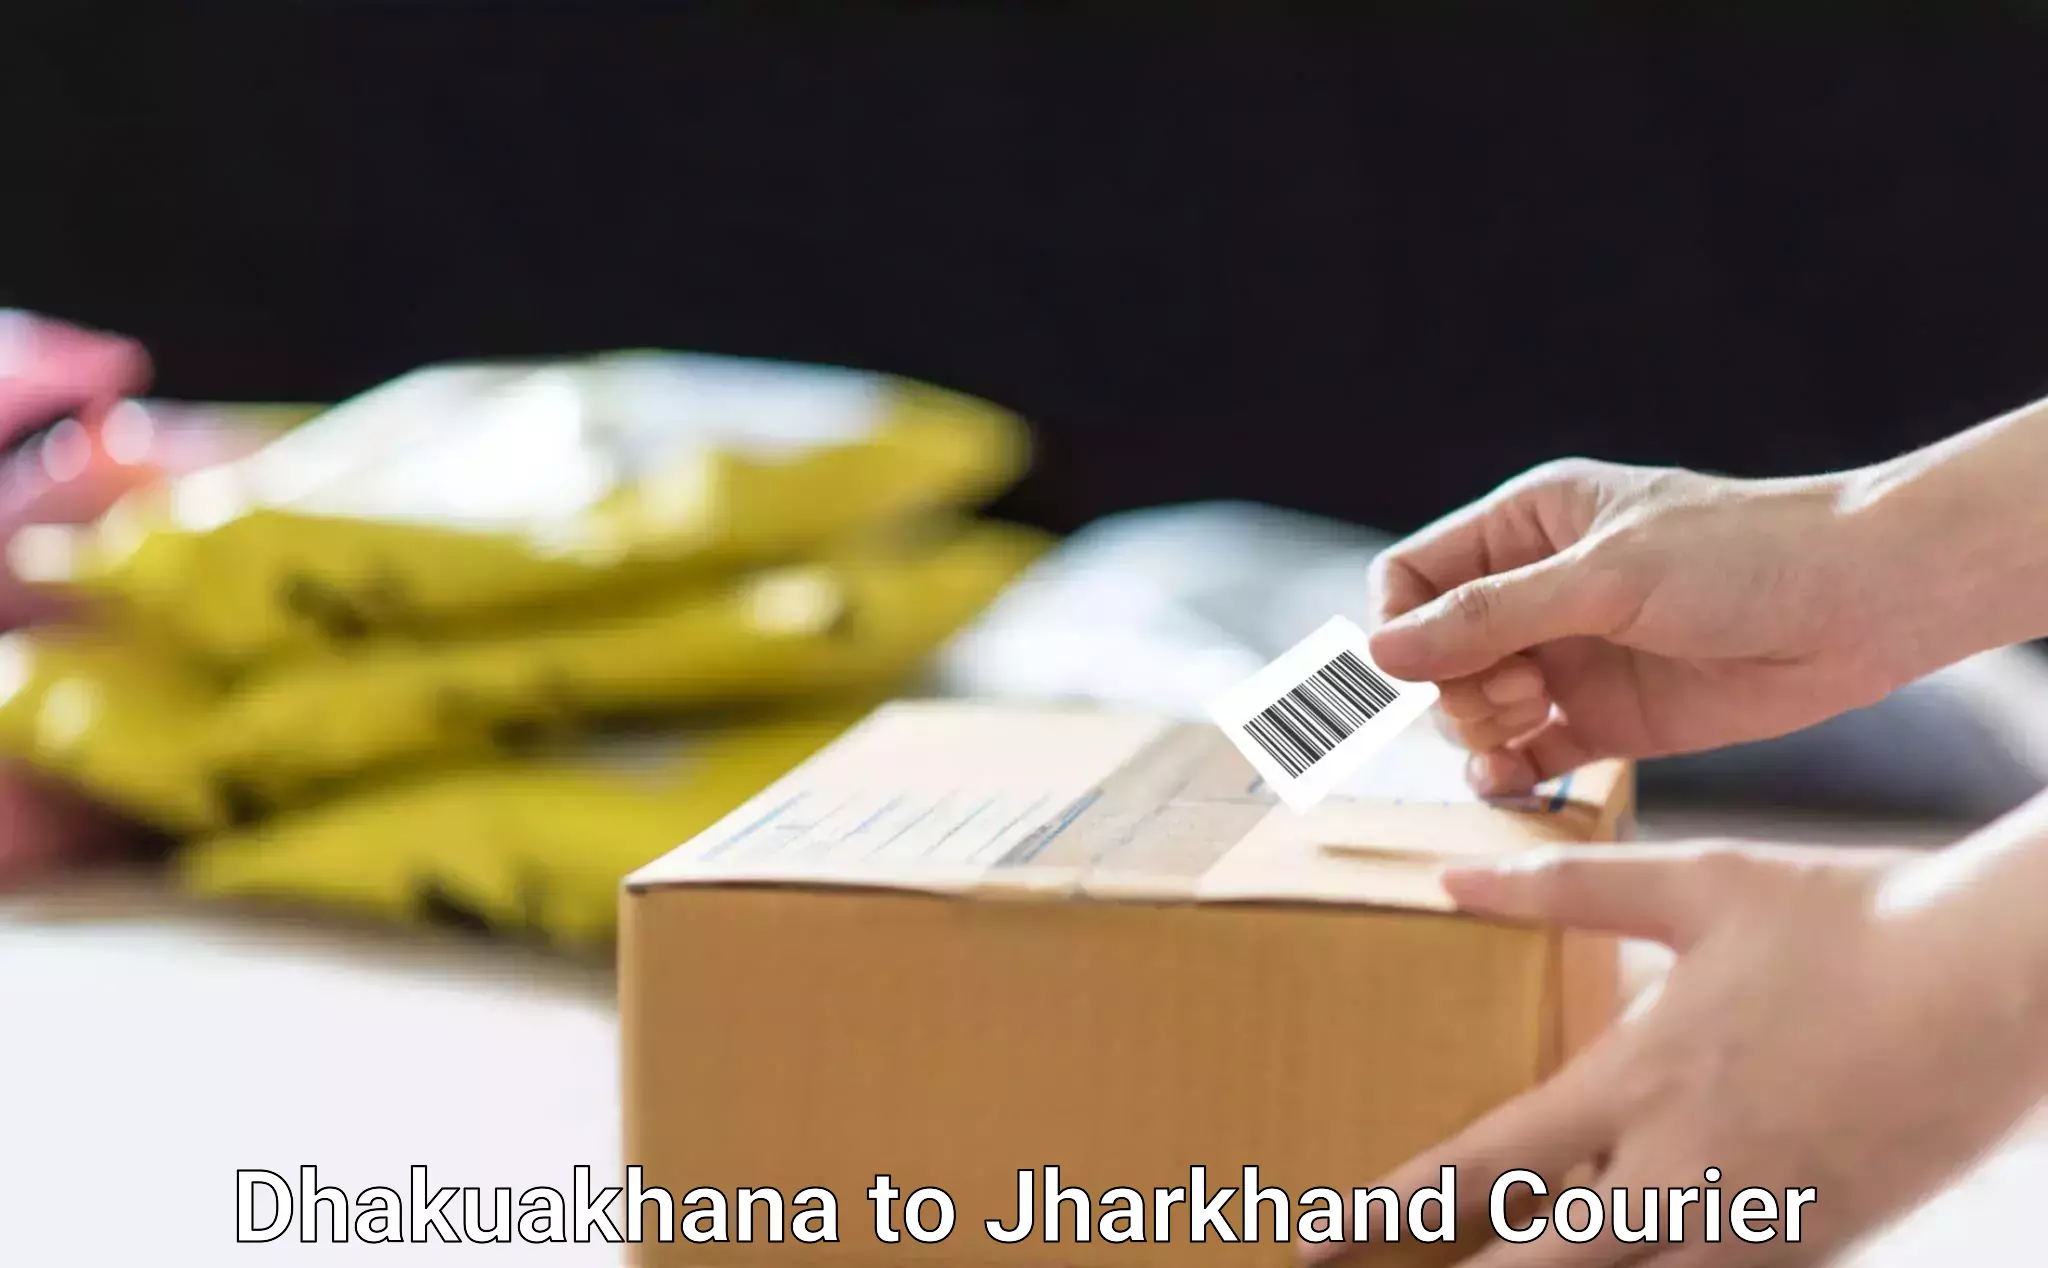 Express package handling Dhakuakhana to Jharkhand